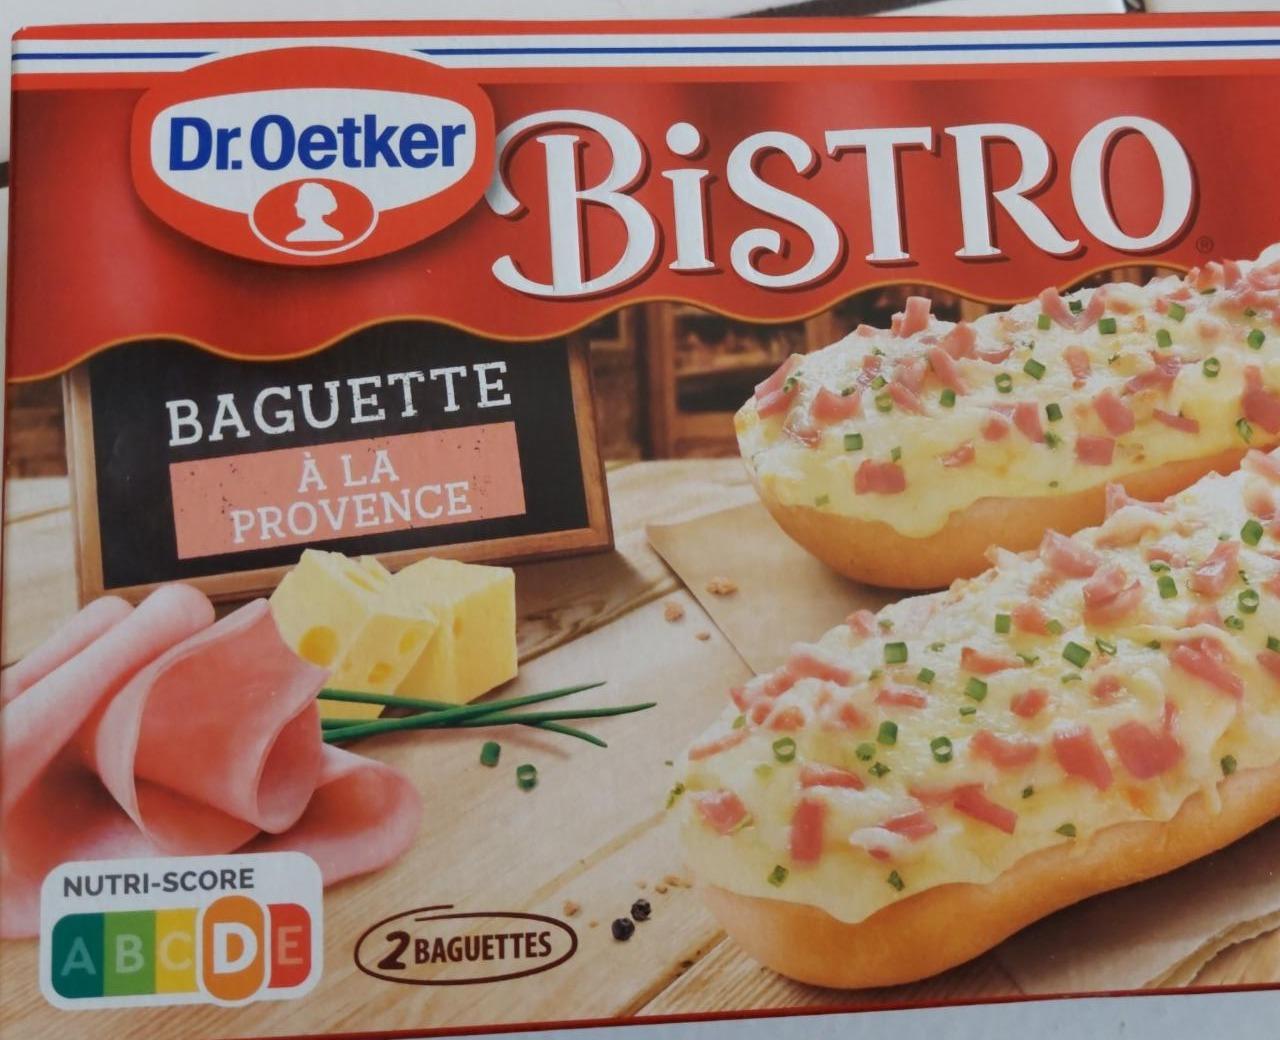 Bistro Baguette à la Provence Dr.Oetker - kalorie, kJ a nutriční hodnoty